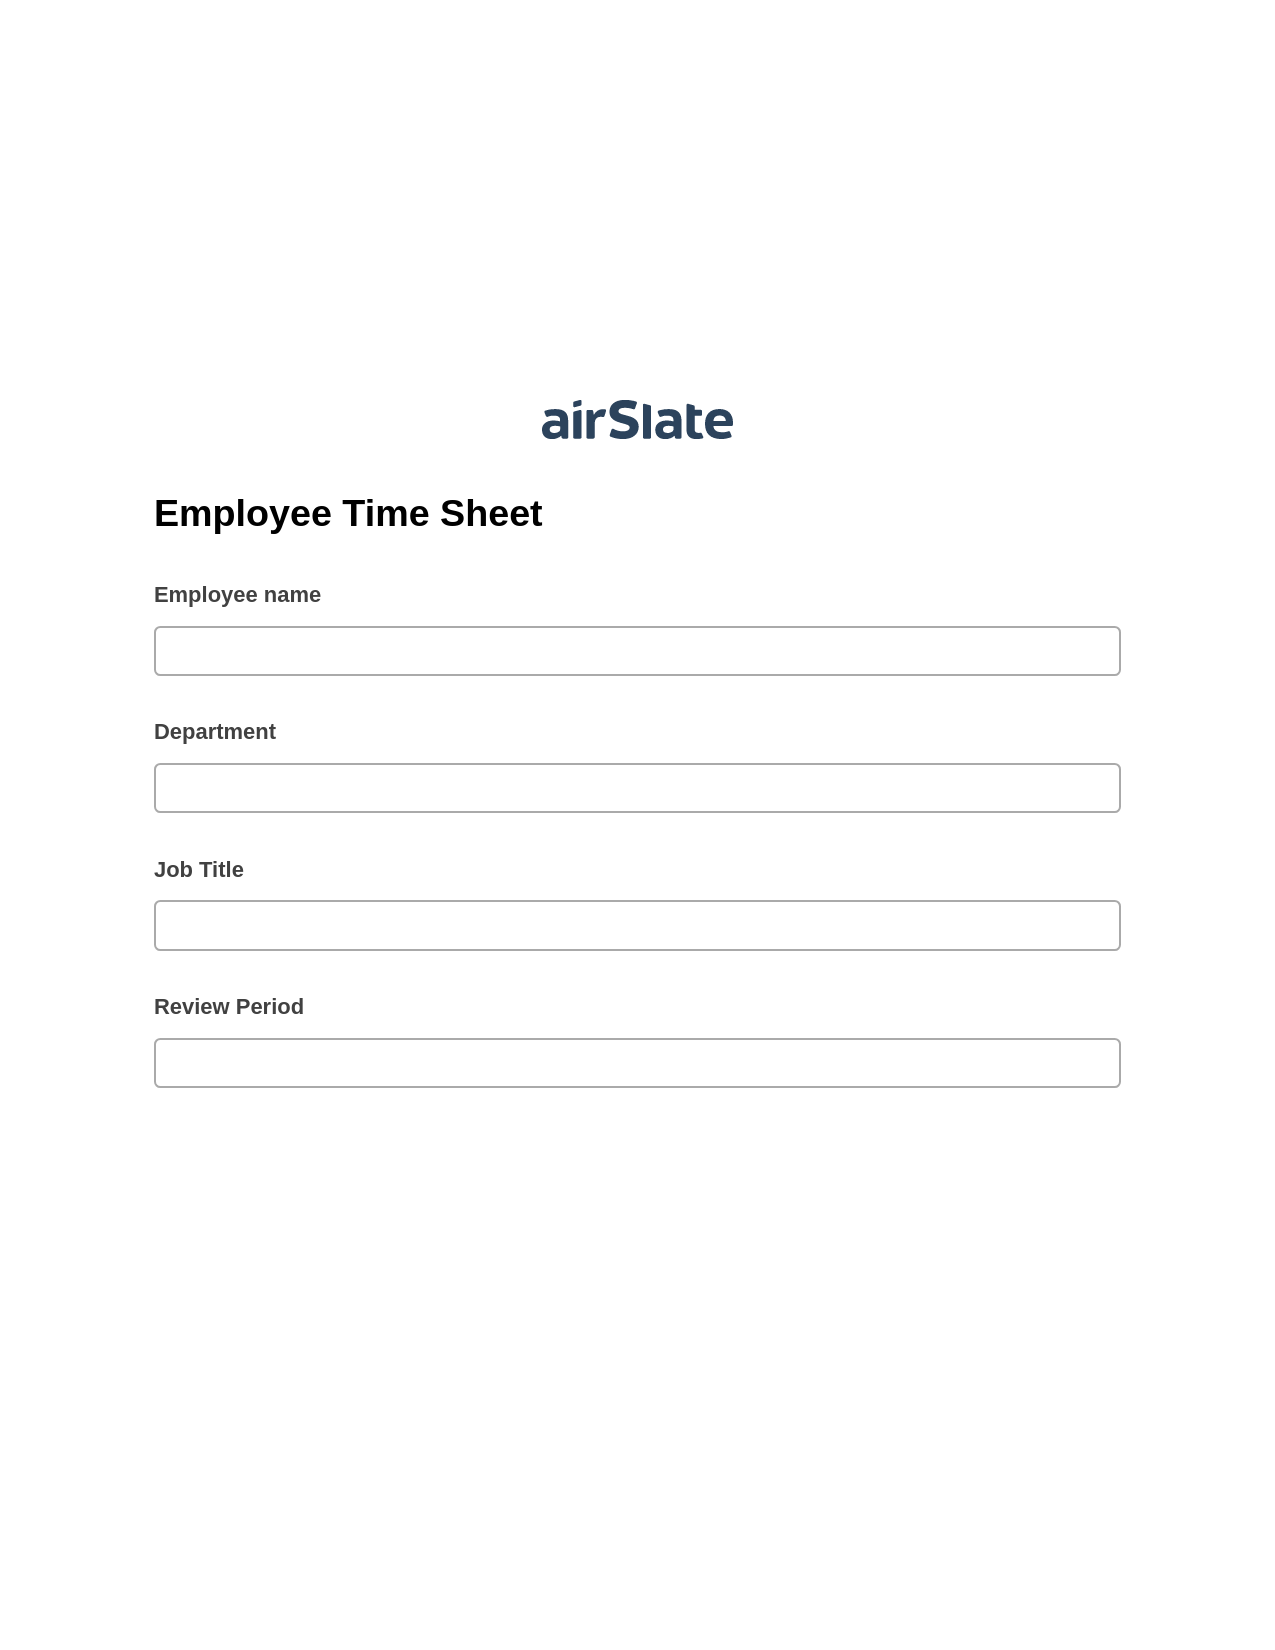 Multirole Employee Time Sheet Pre-fill from MySQL Bot, Lock the Slate Bot, Export to Smartsheet